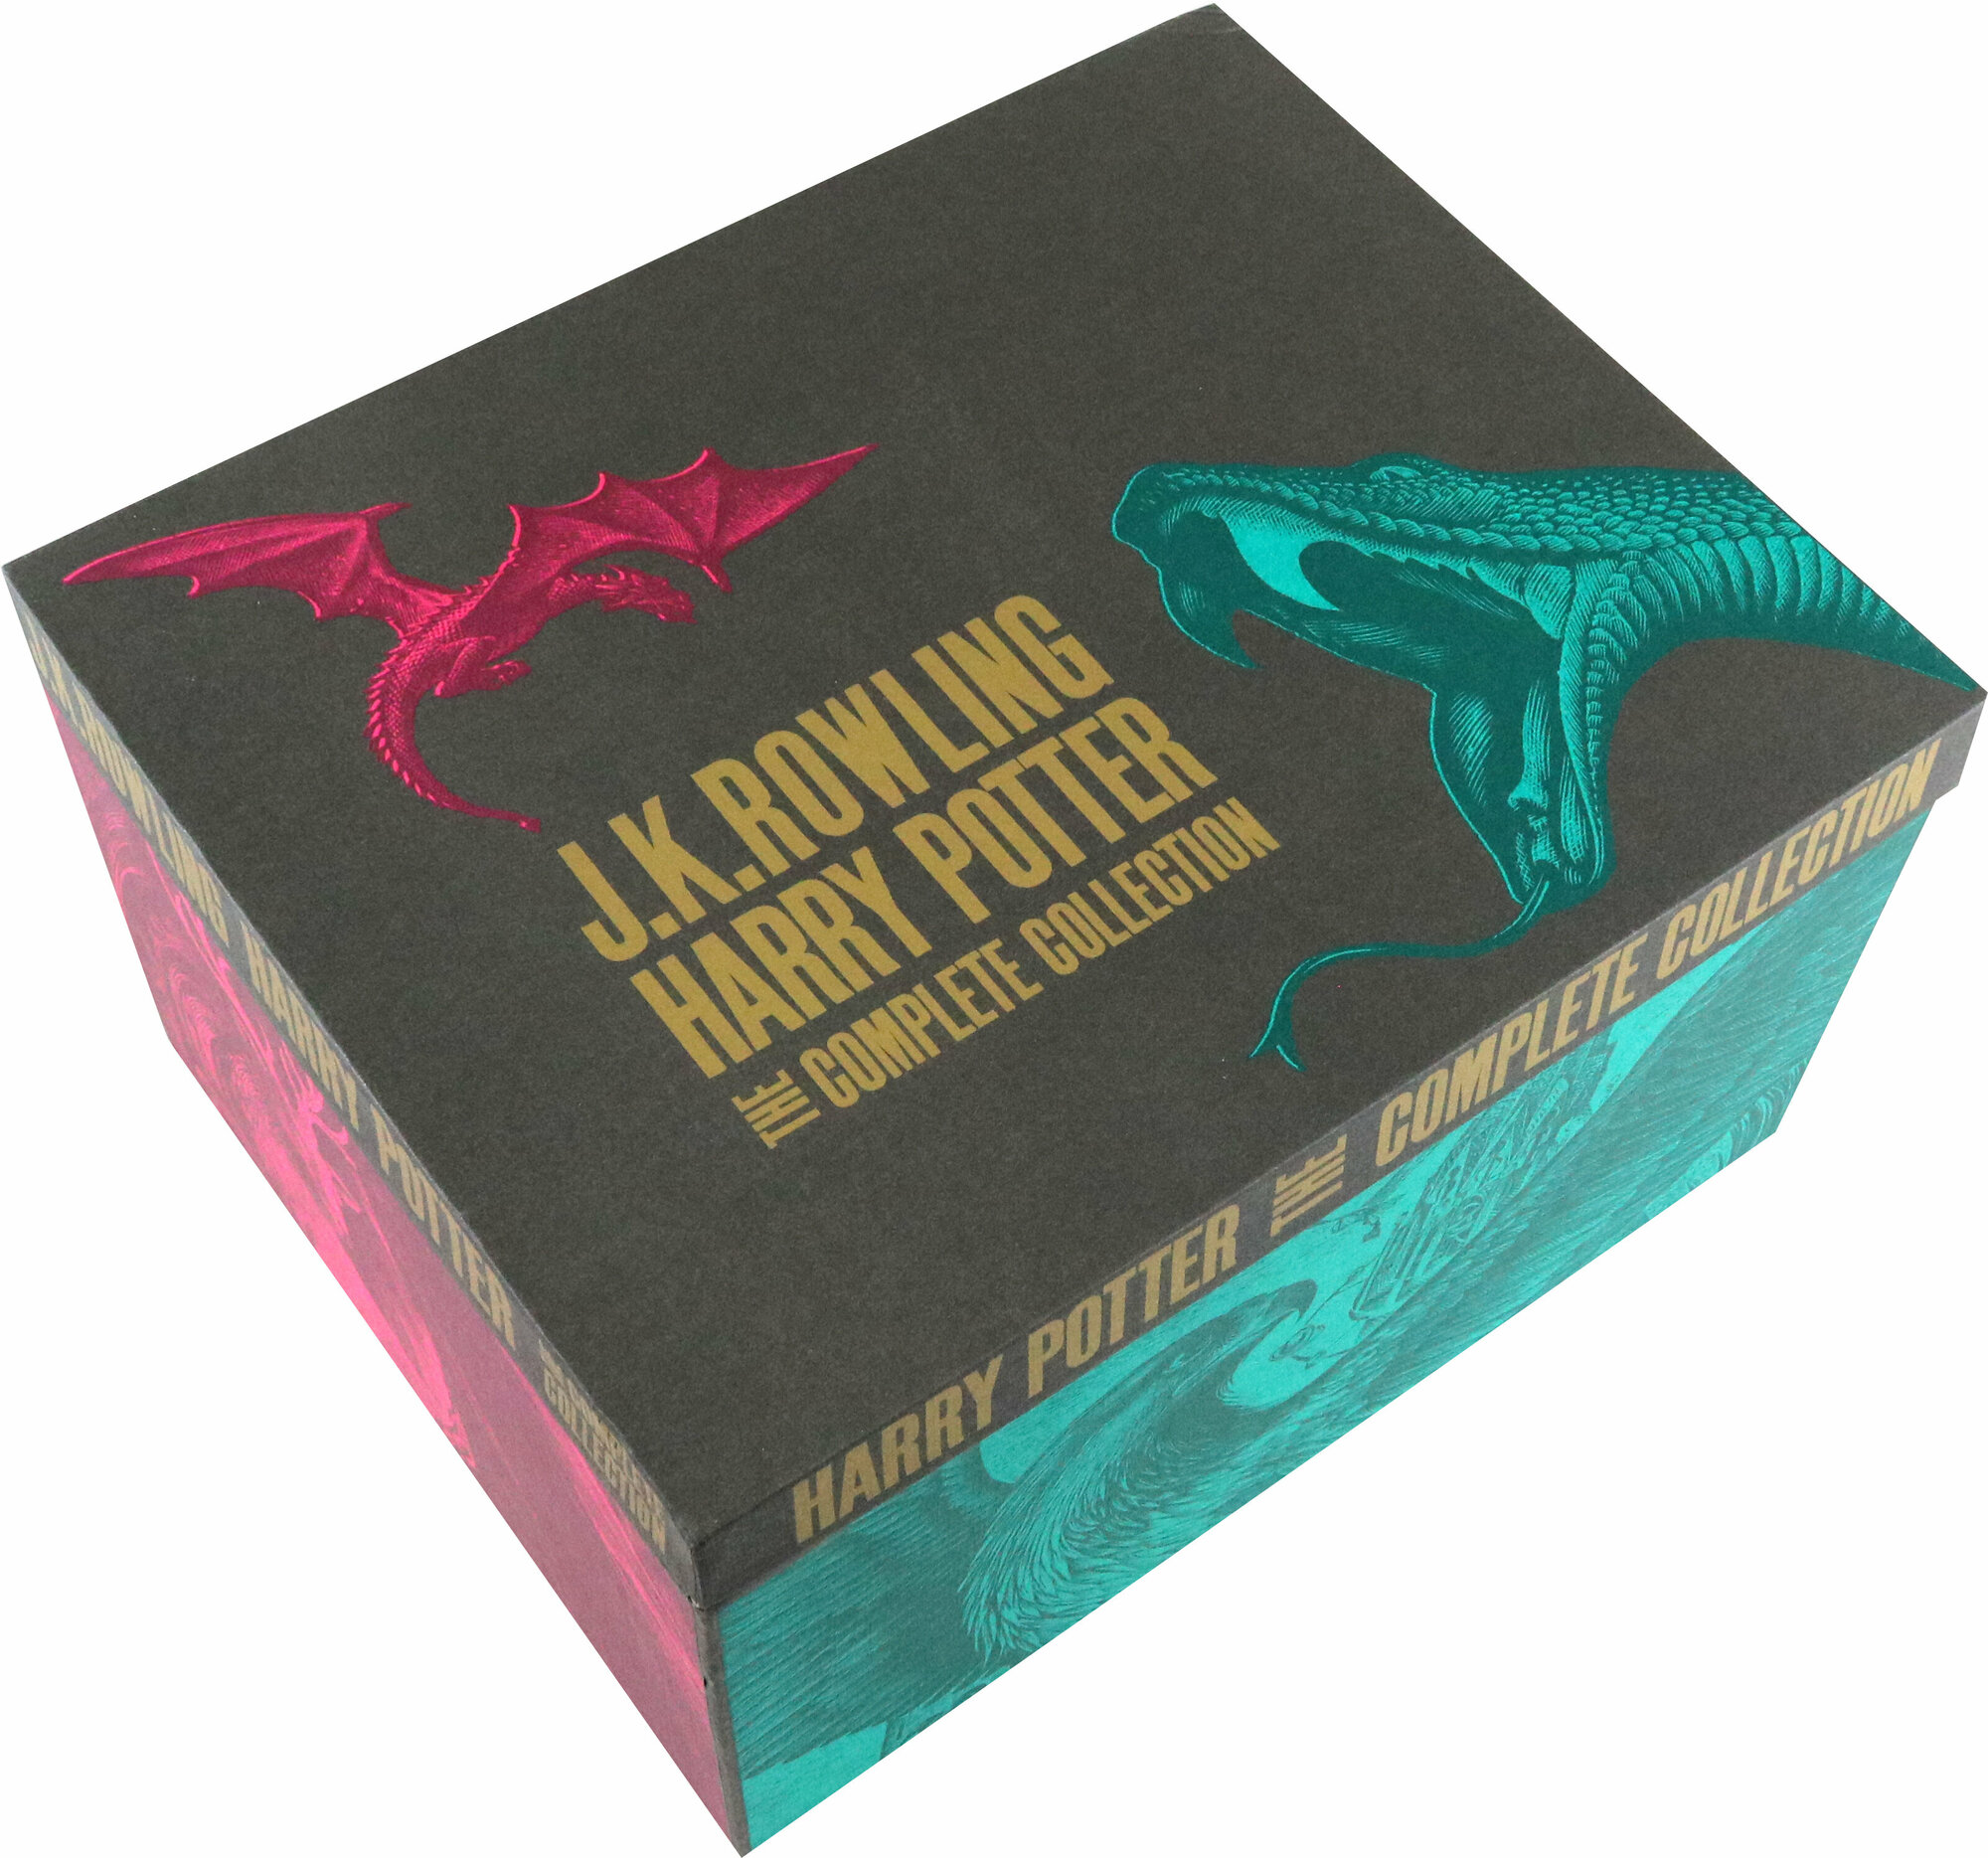 Harry Potter The Complete Collection Adult Box Set комплект из 7 книг - фото №3